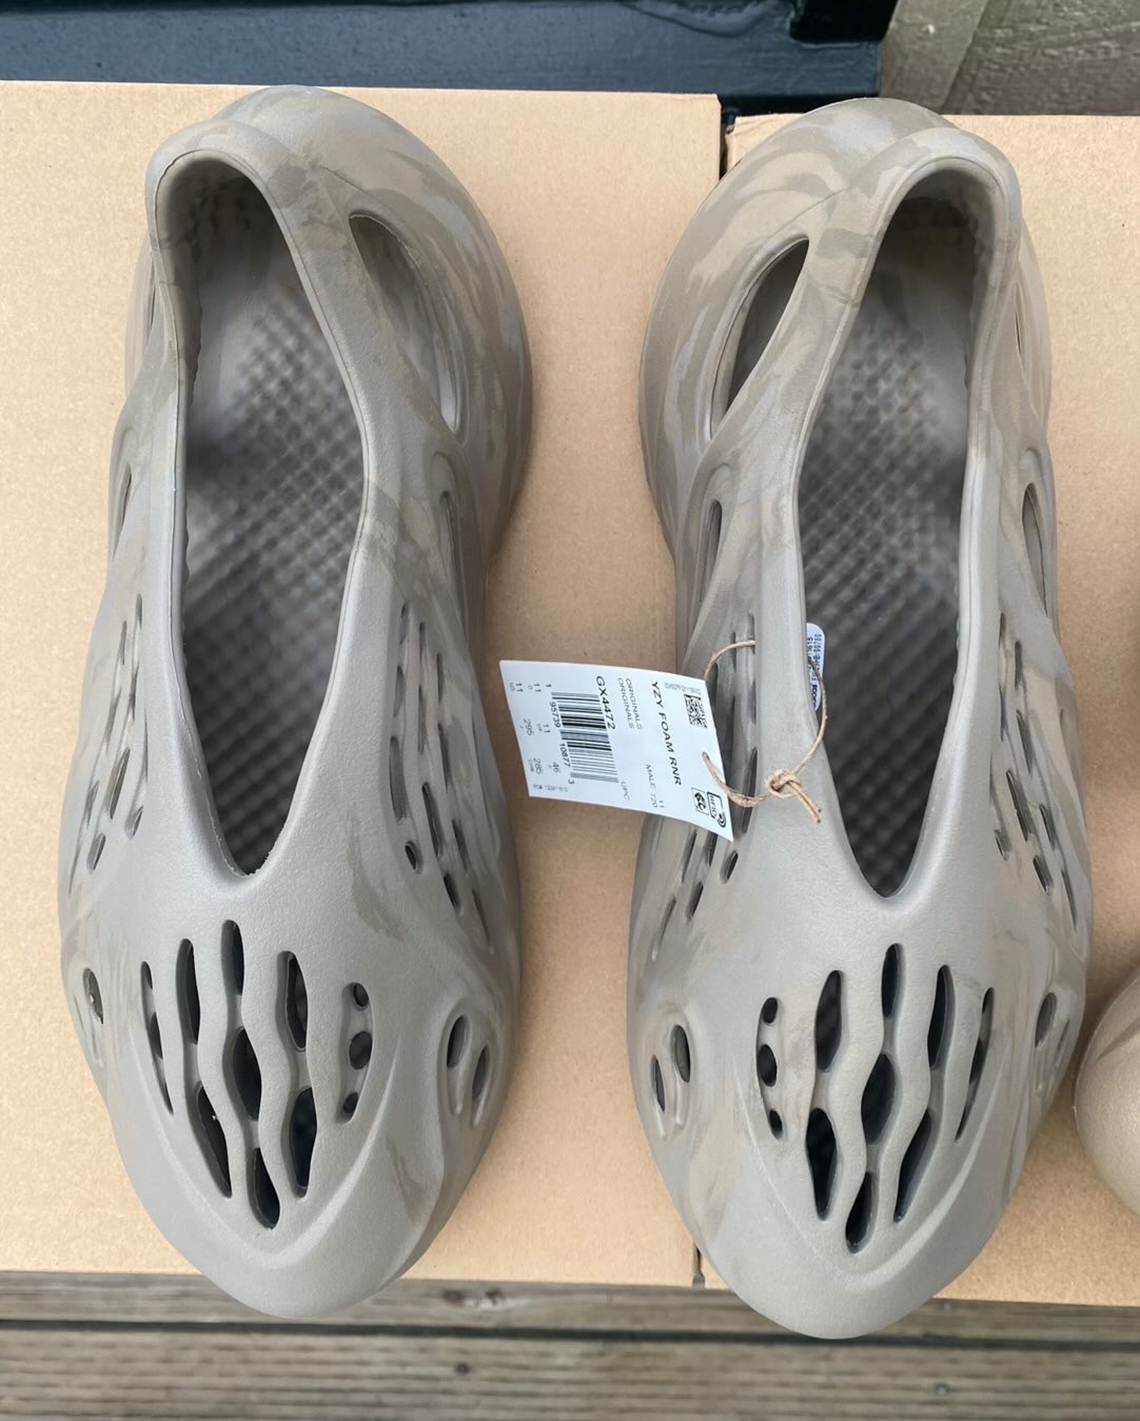 Adidas Yeezy Foam Runner Stone Sage Gx4472 Release Date 3